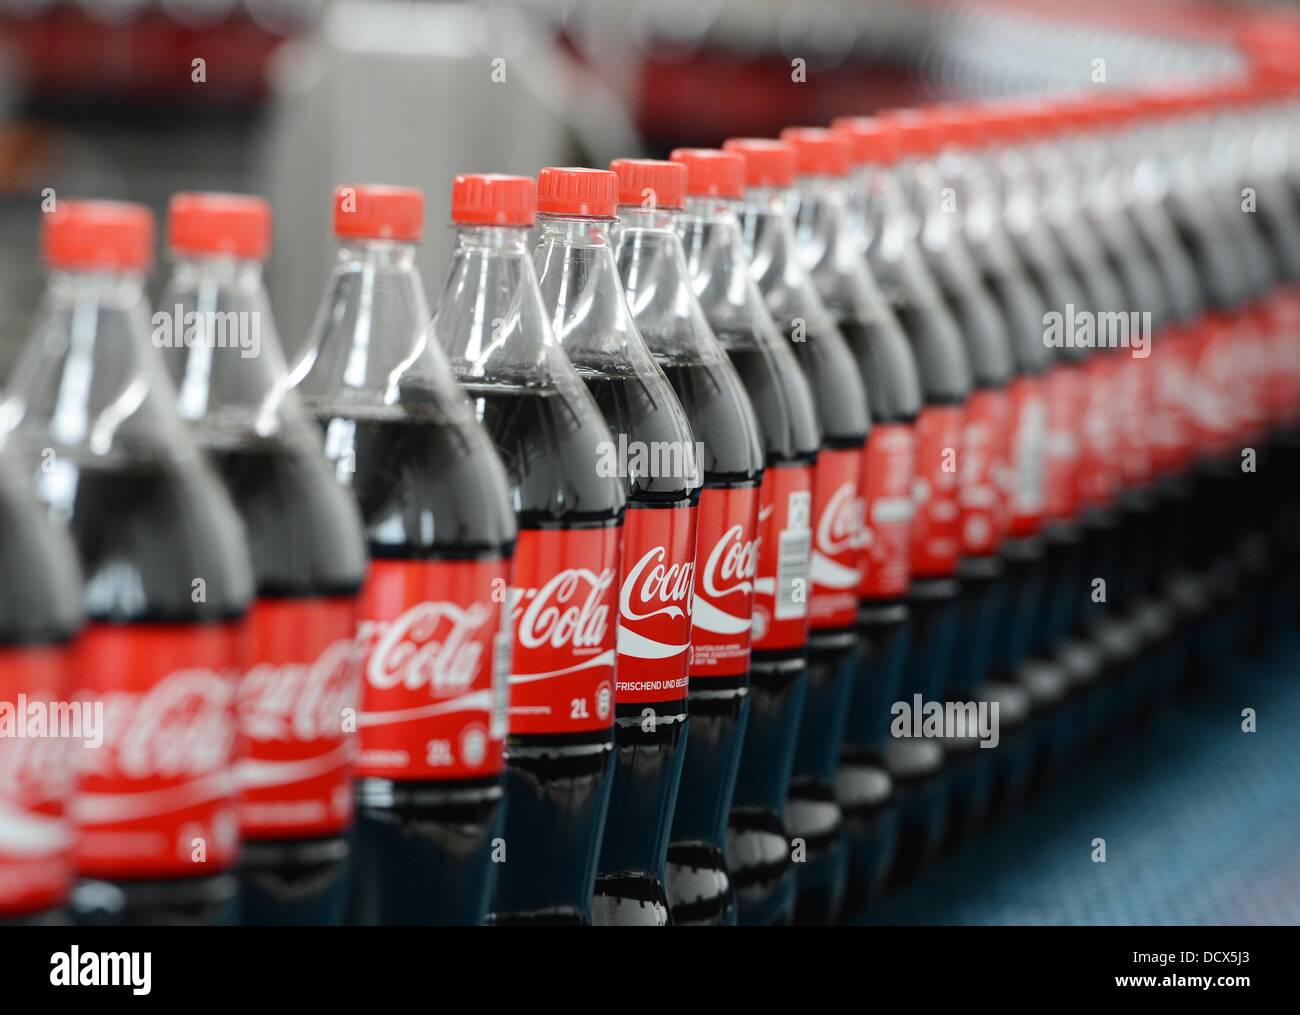 Coca cola two bottles fotografías e imágenes de alta resolución - Alamy